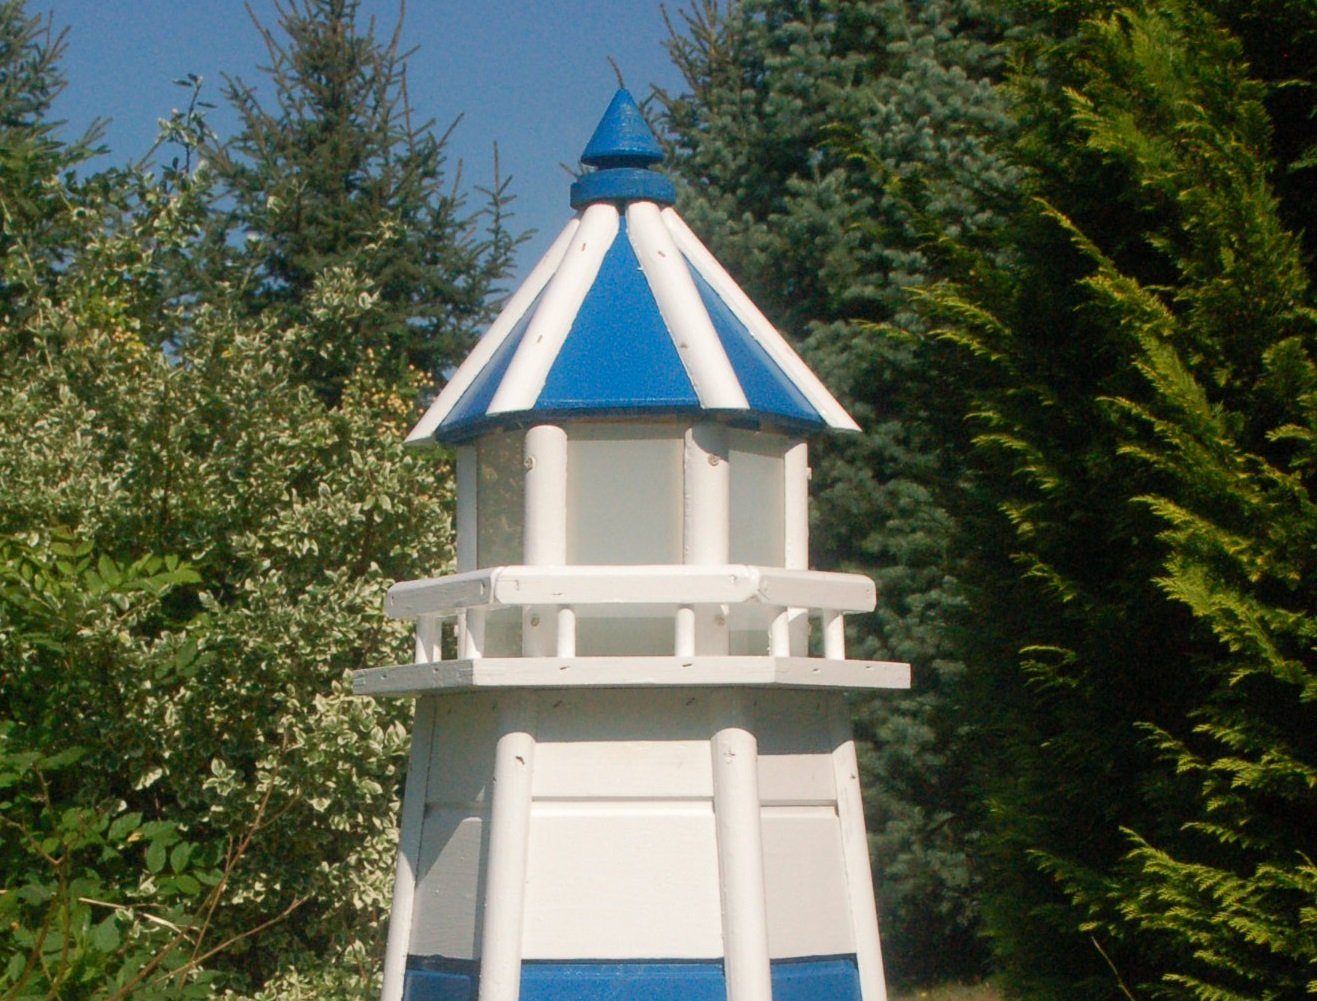 DSH DEKO blau-weiß Gartenfigur HANNUSCH 230 1,40 Leuchtturm V Beleuchtung SHOP mit m Holz